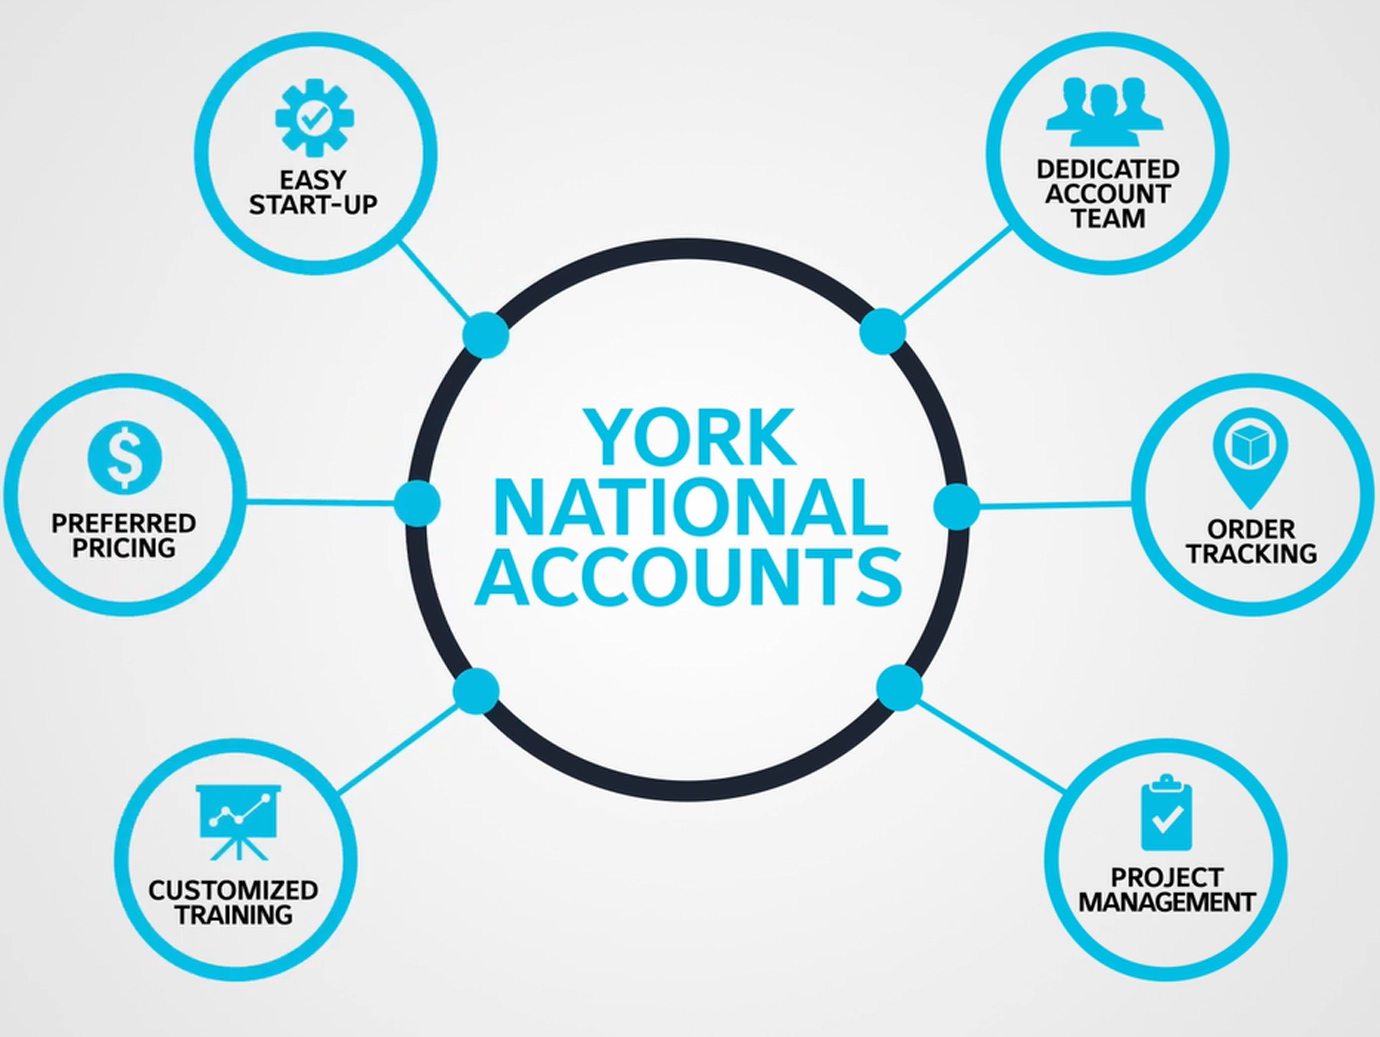 YORK National Accounts